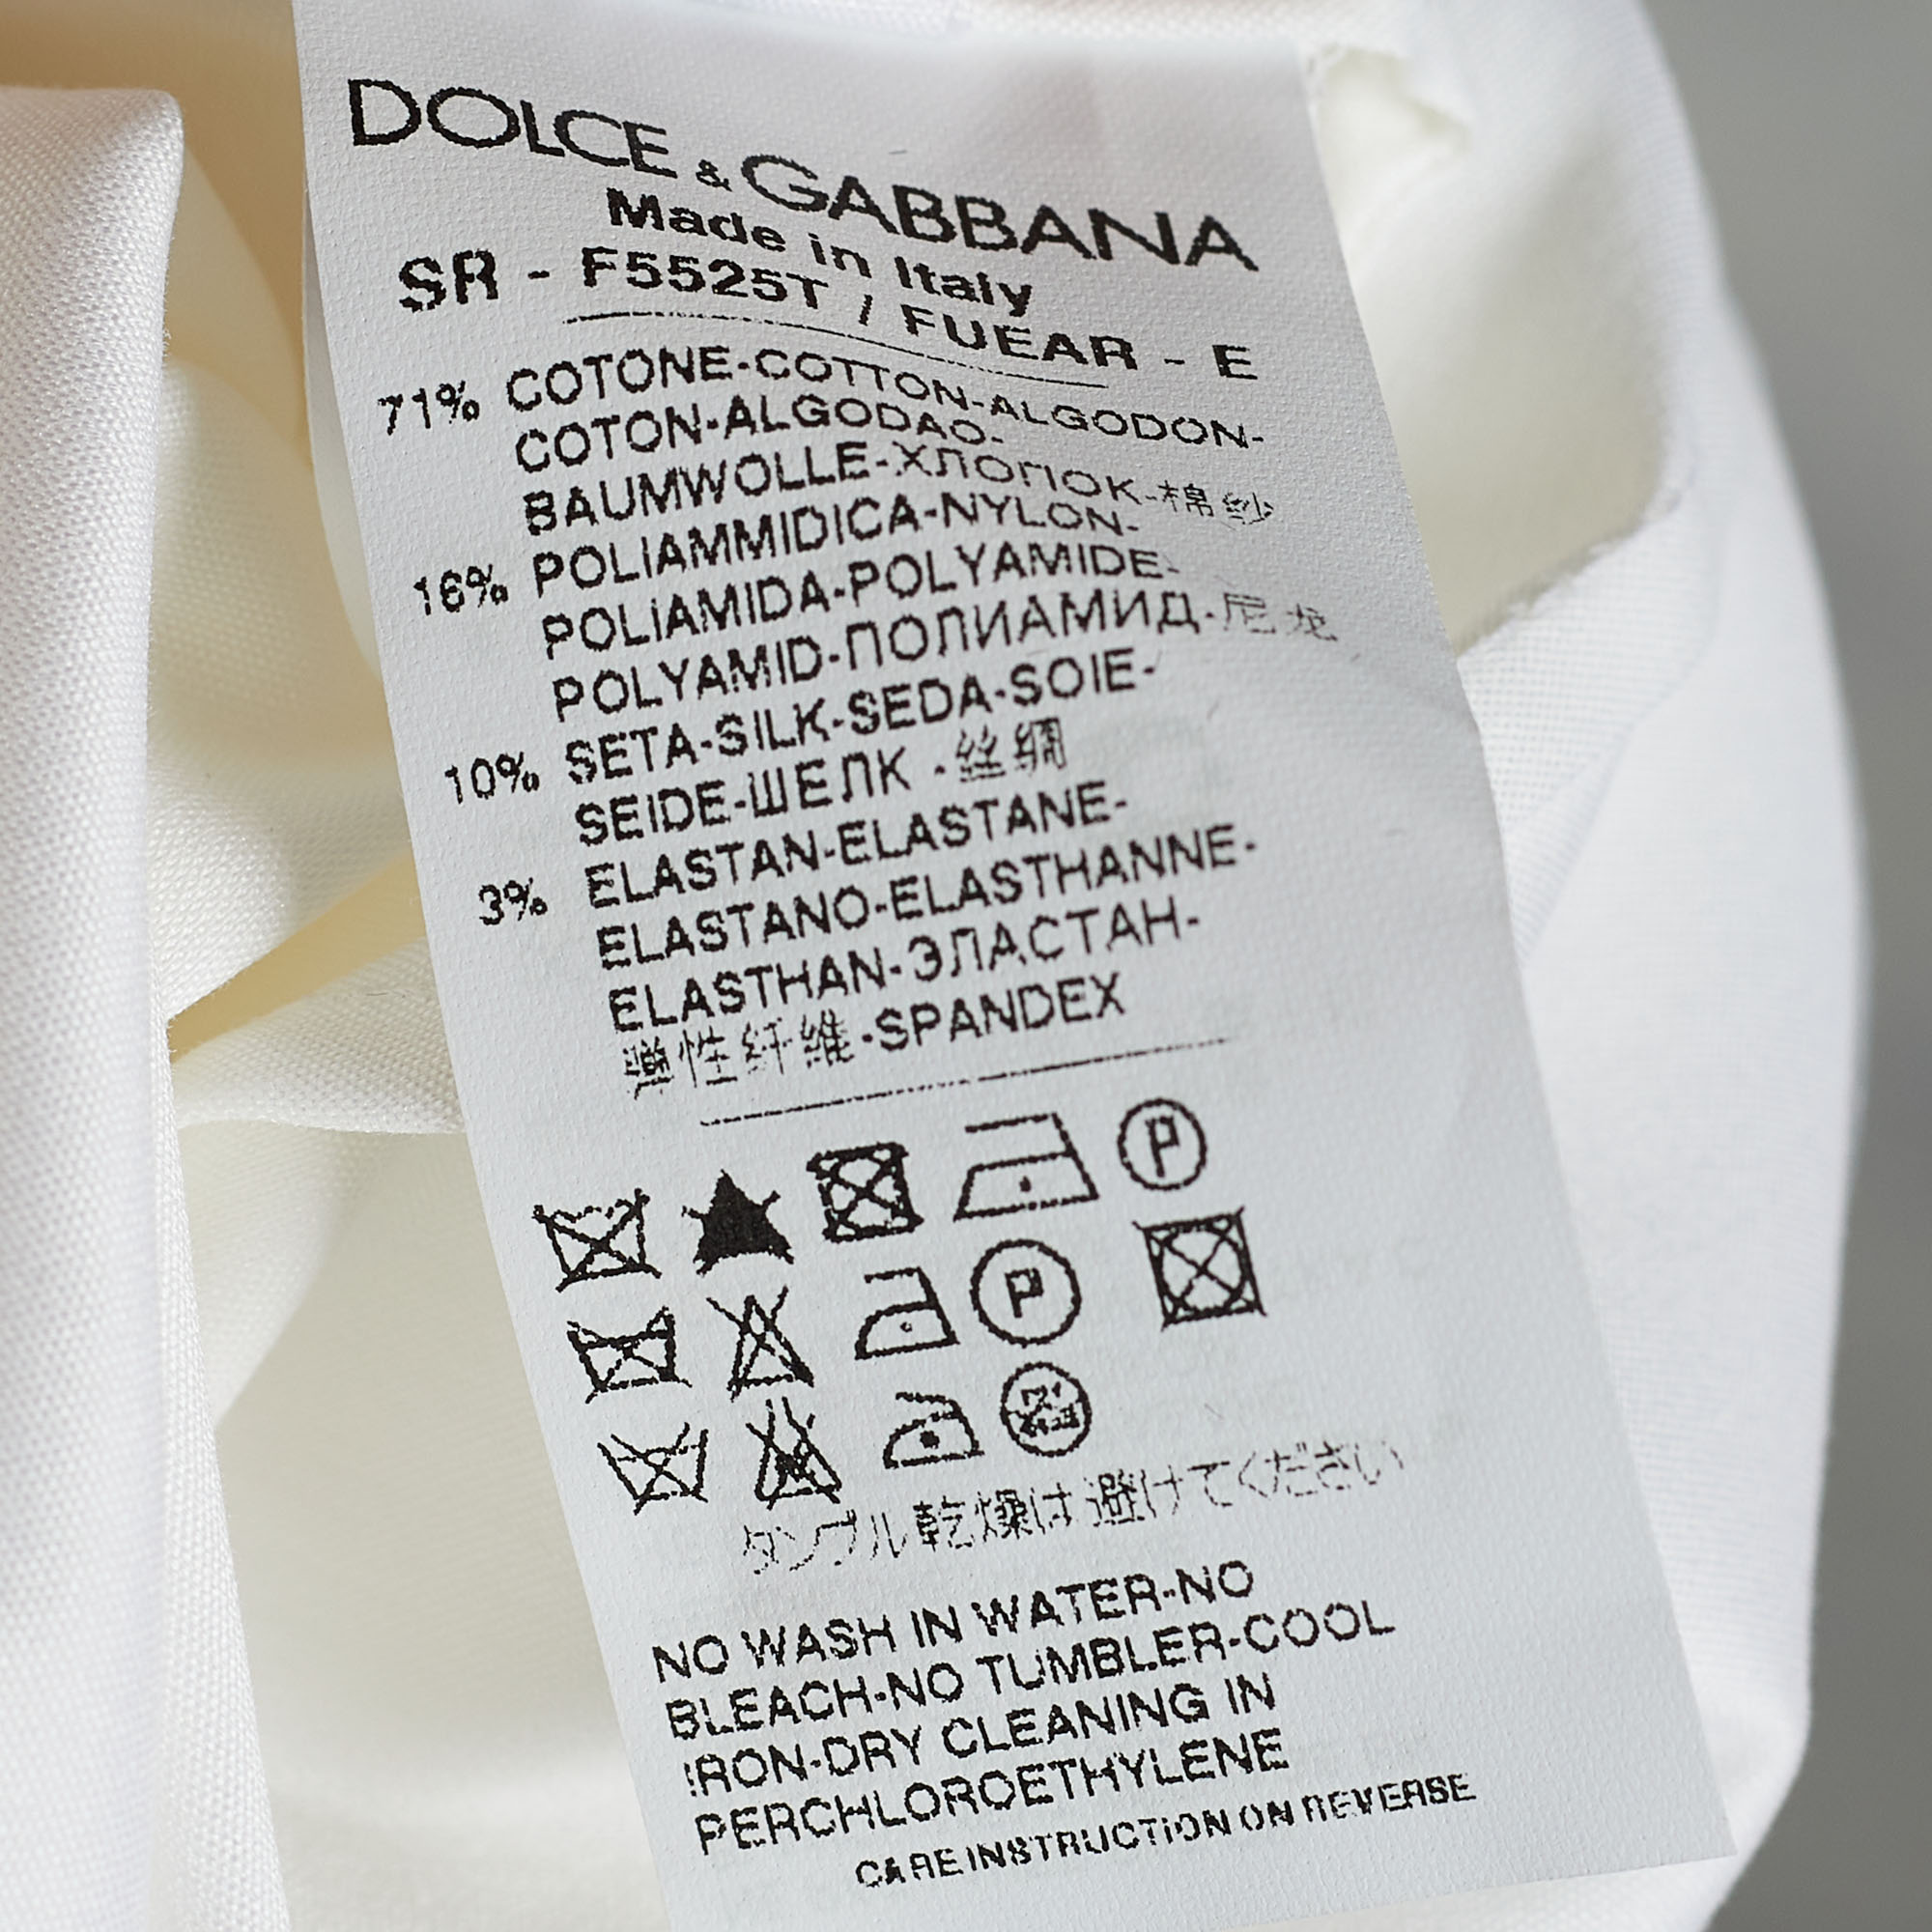 Dolce & Gabbana Off-White Poplin Bow Tie Blouse M